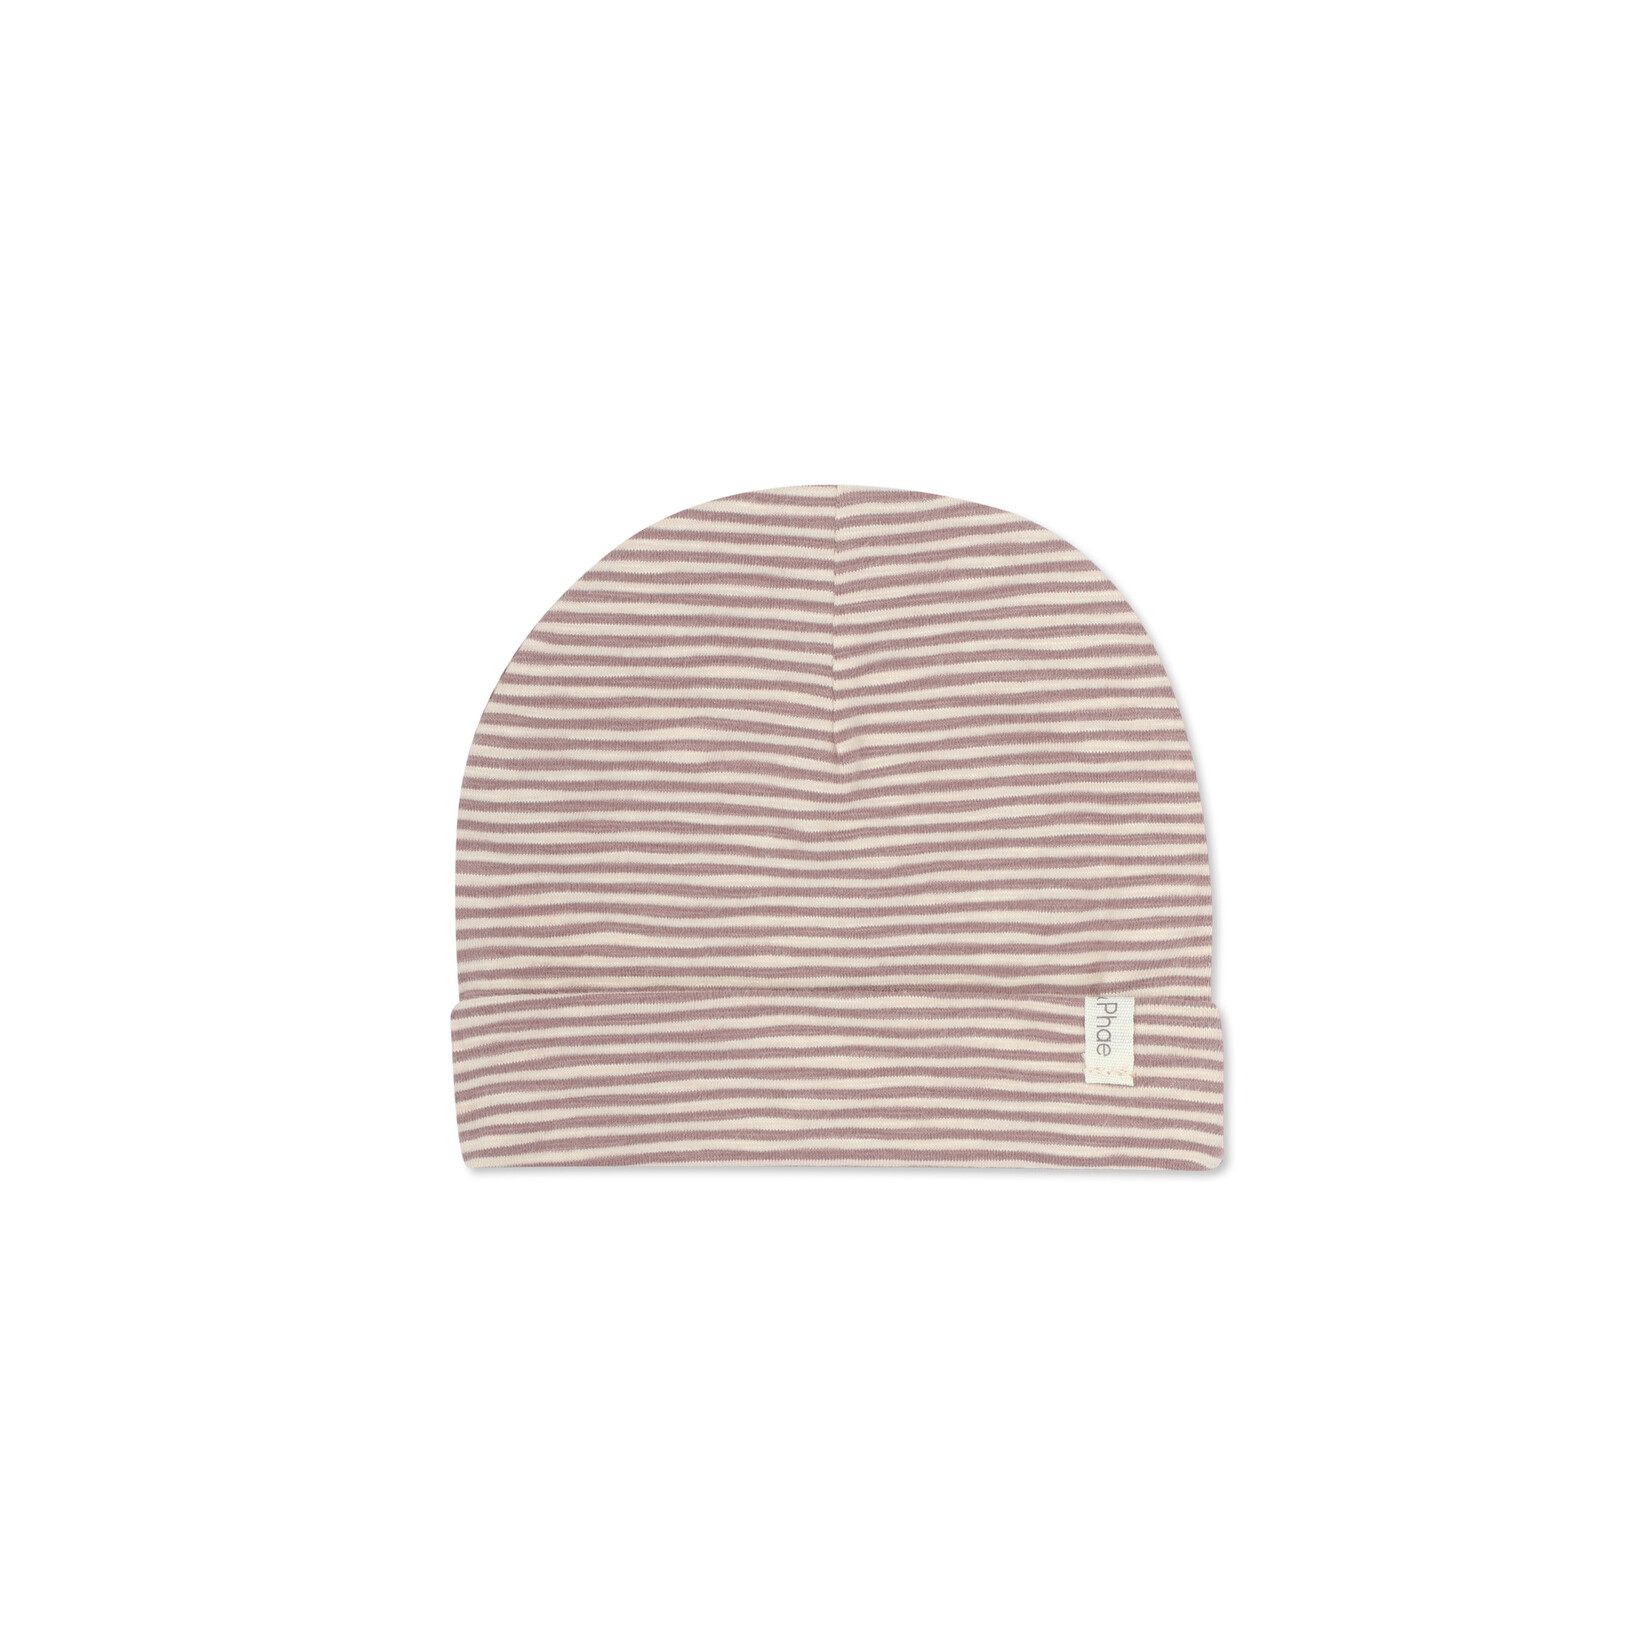 Phil&Phae Phil&Phae - Baby hat stripes - soft amethyst